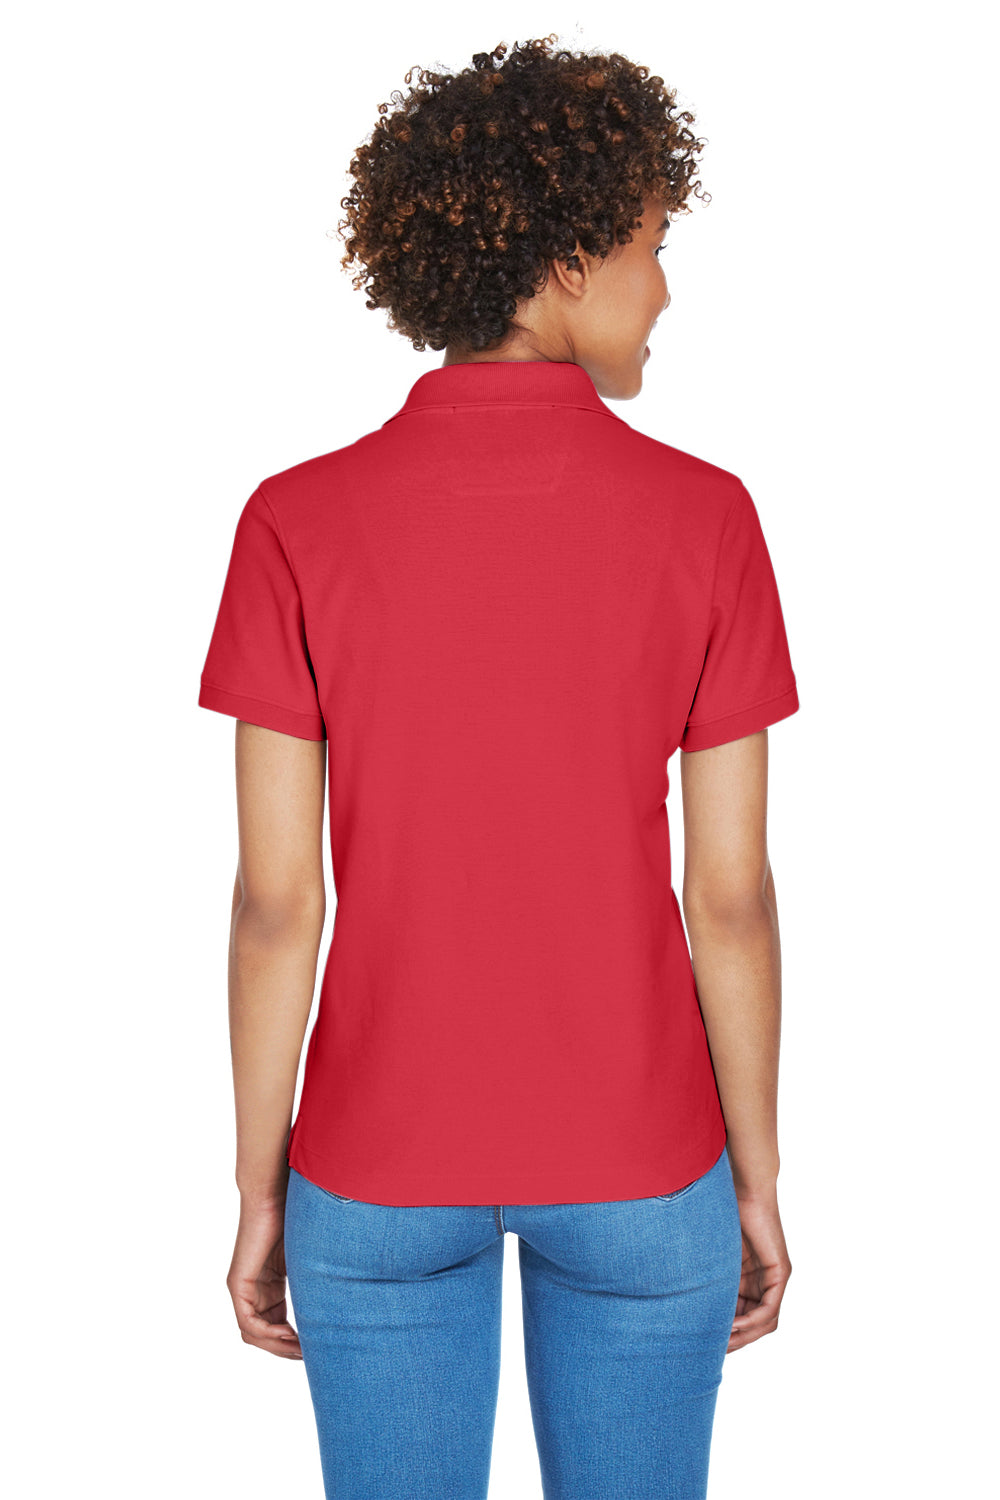 Devon & Jones D100W Womens Short Sleeve Polo Shirt Red Back